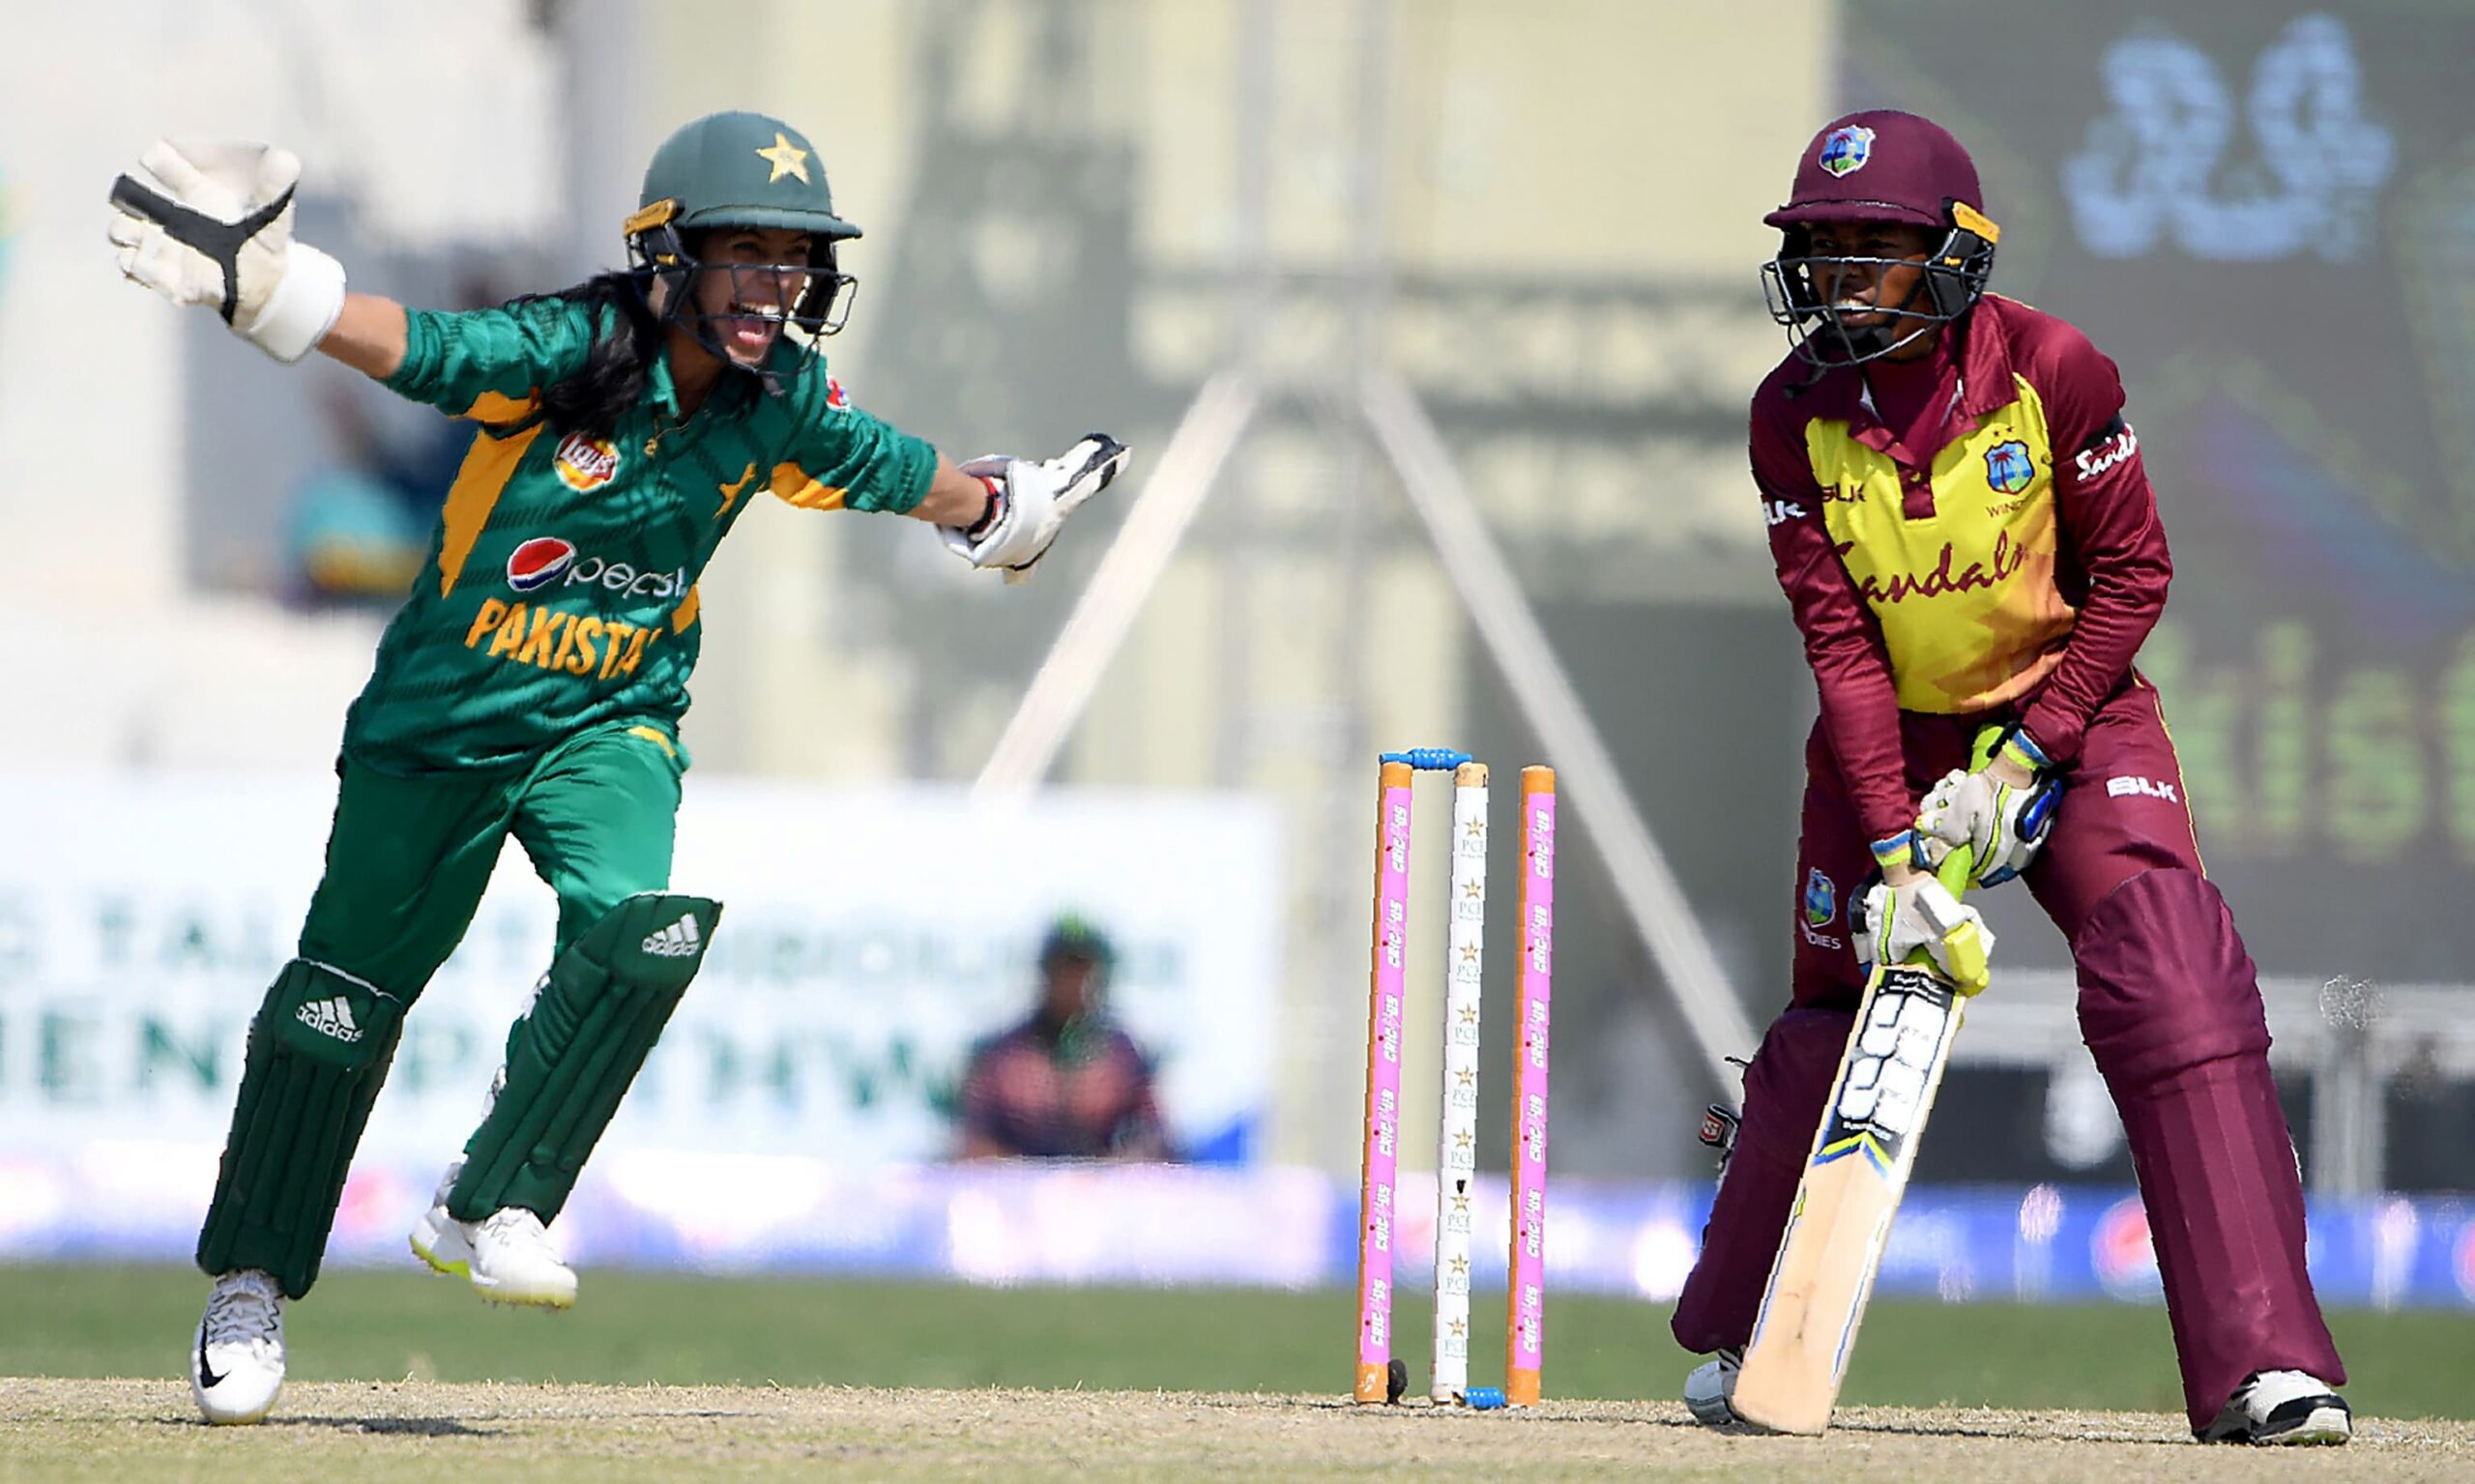 West Indies Cricket confirms to send women’s cricket team to Pakistan